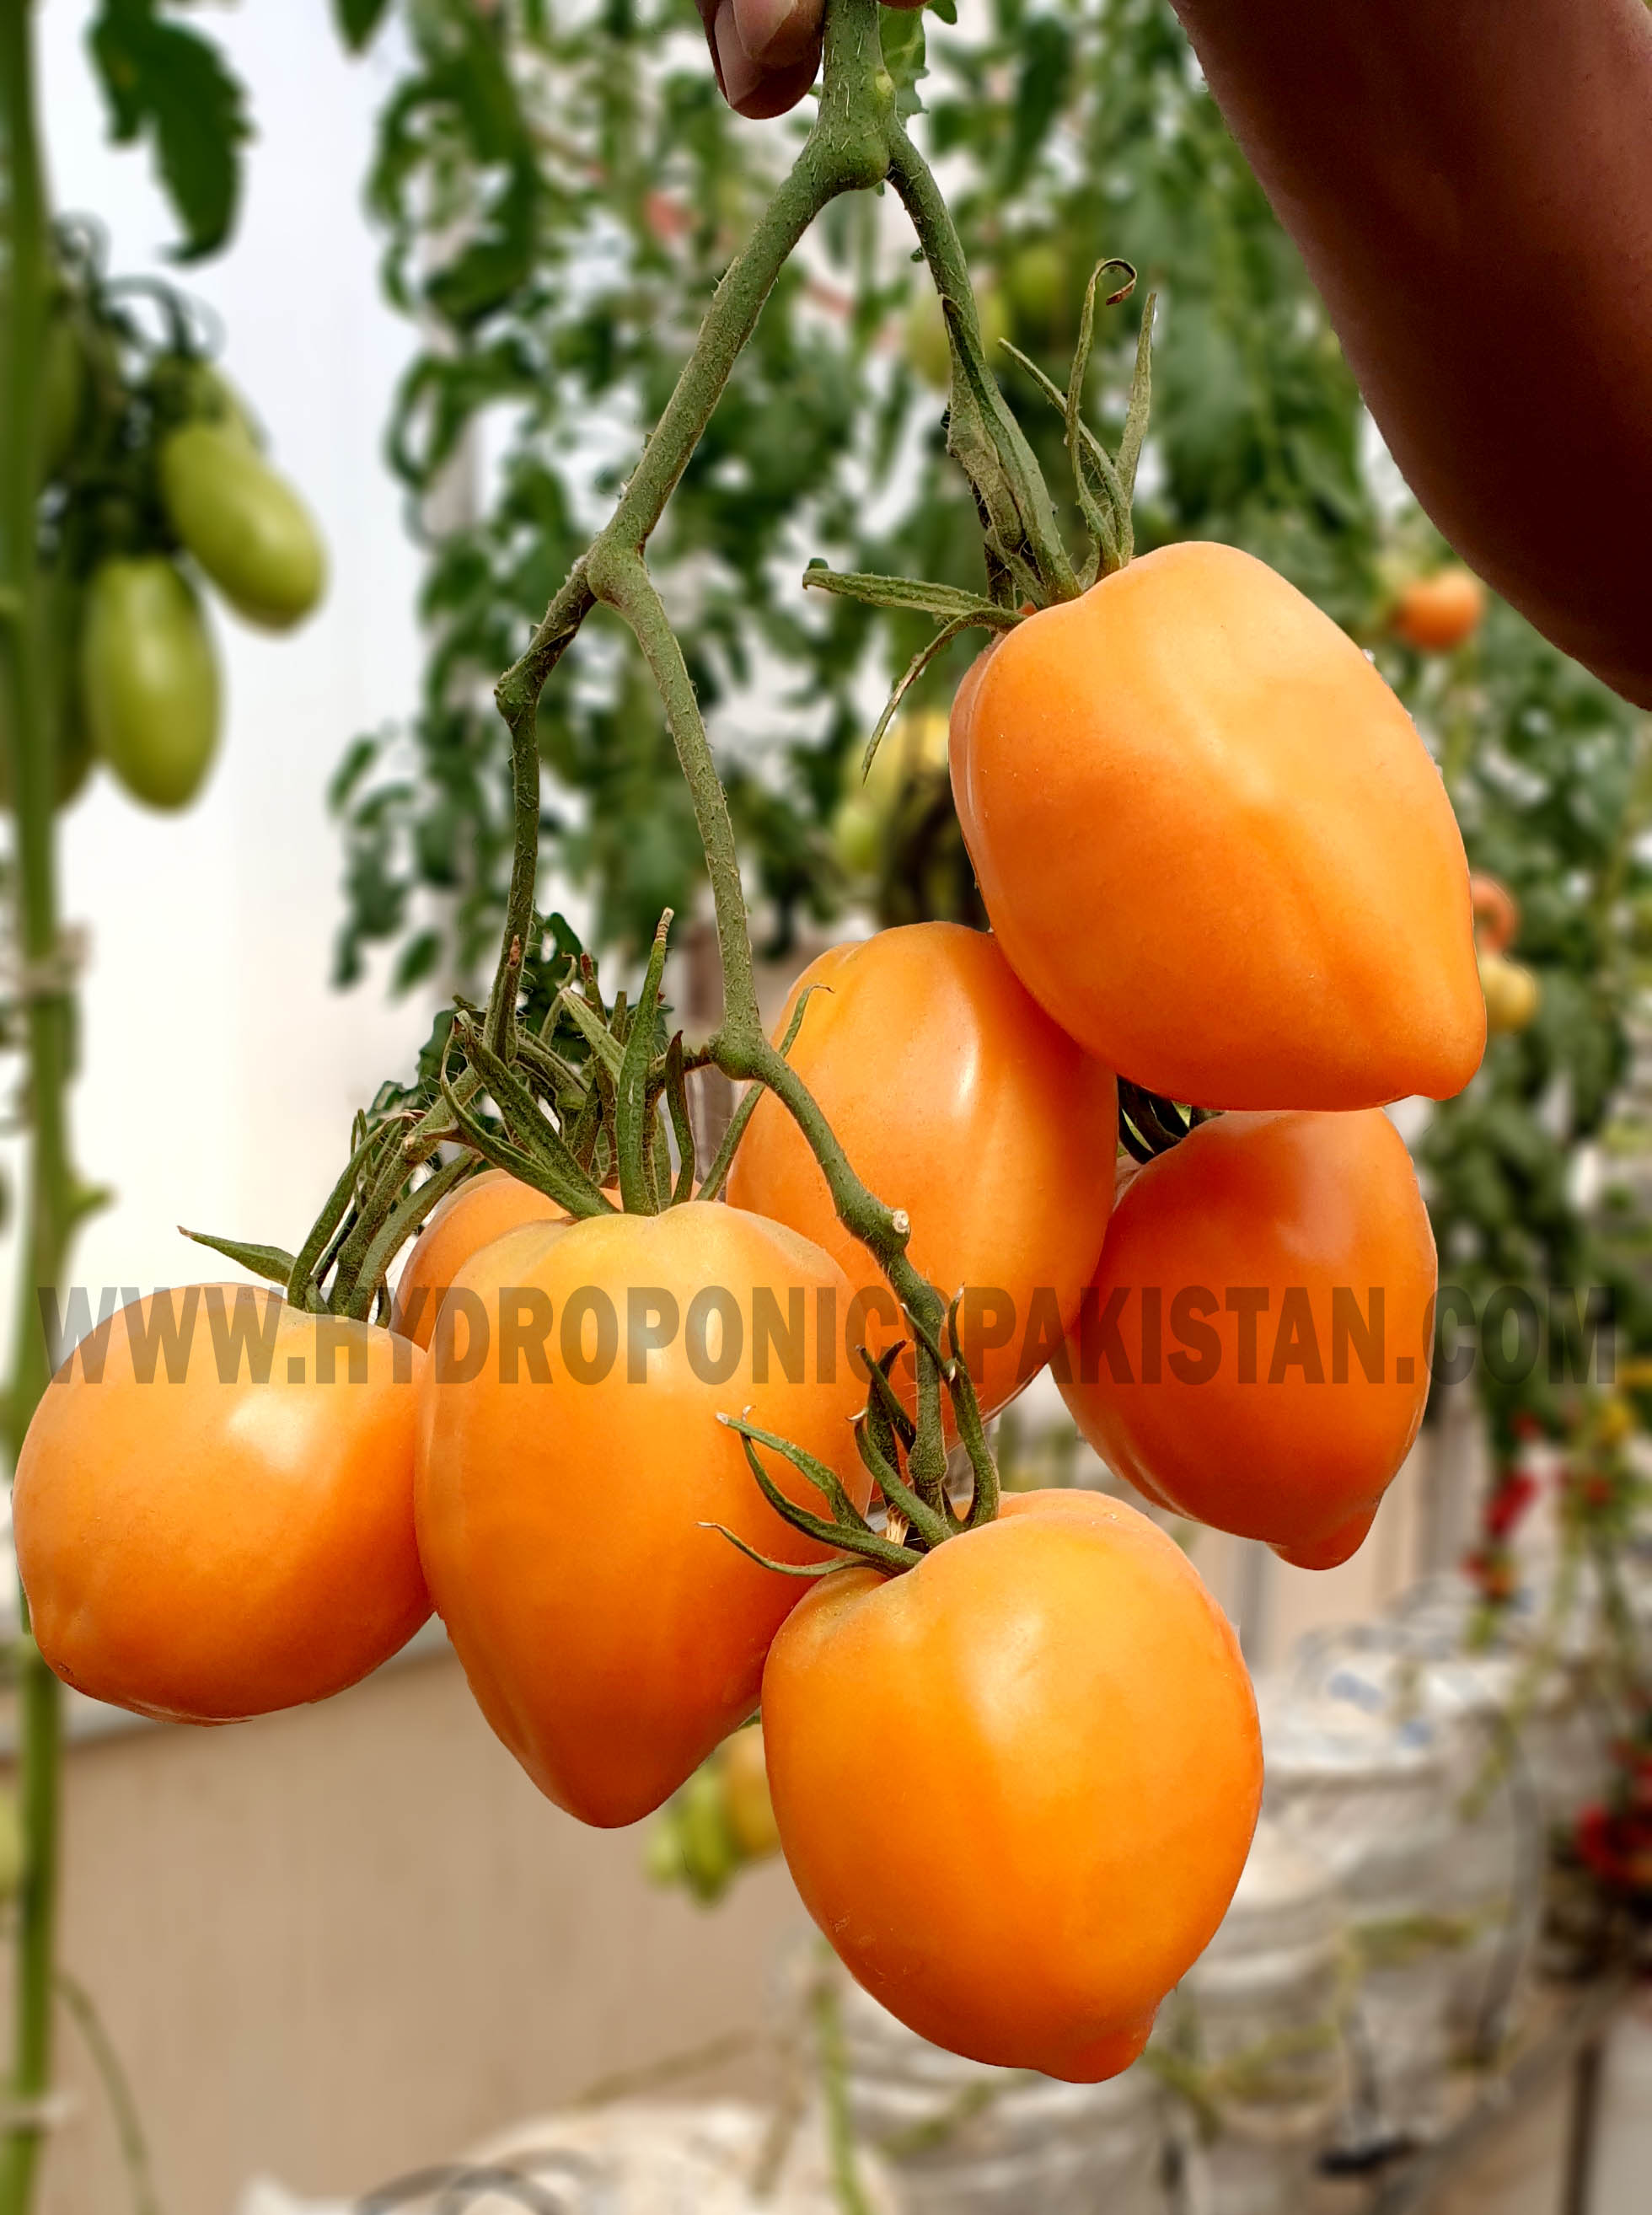 1_Hydroponics-Pakistan-Pakistan-Hydroponics-Russain-Tomato-Cluster